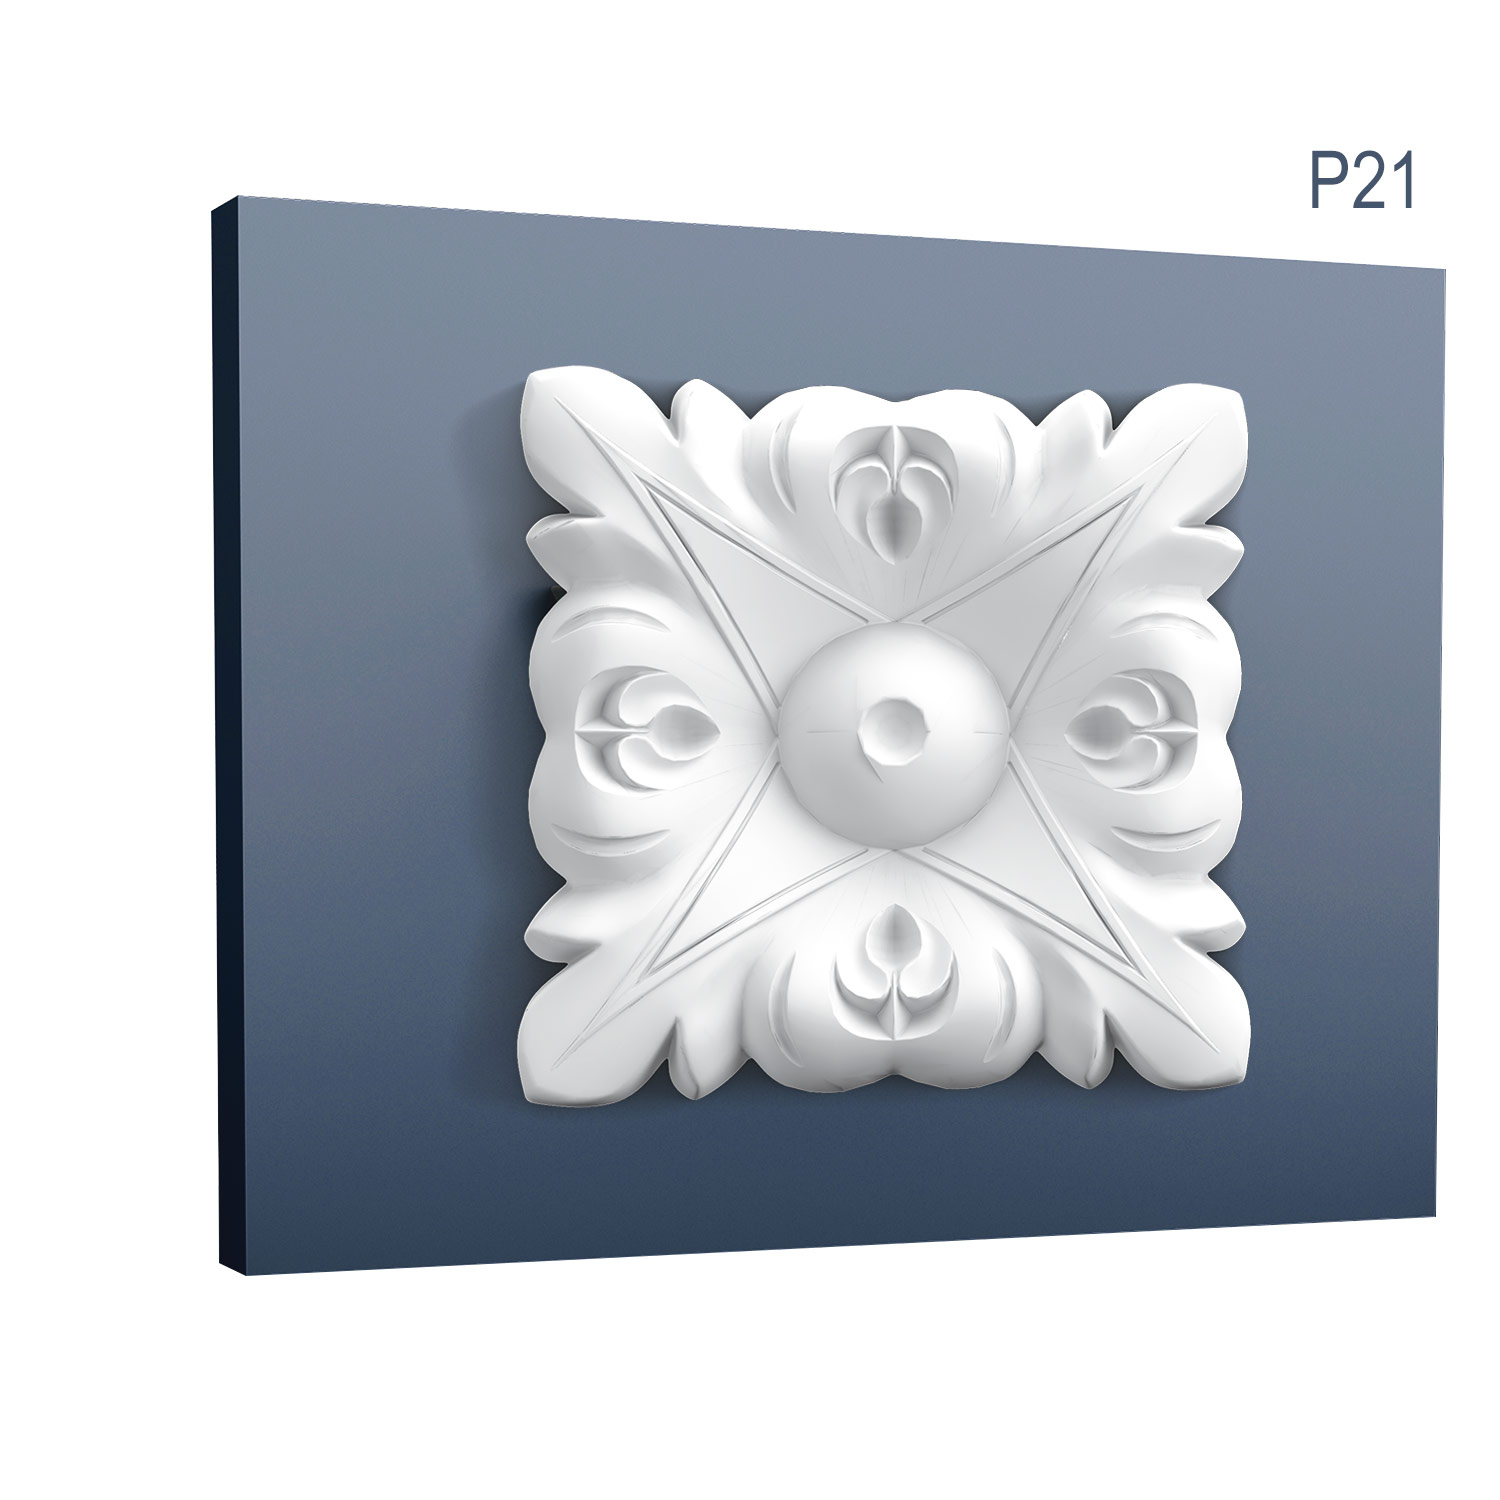 Ornament Luxxus P21, Dimensiuni: 6.7 X 6.7 X 0.9 cm, Orac Decor